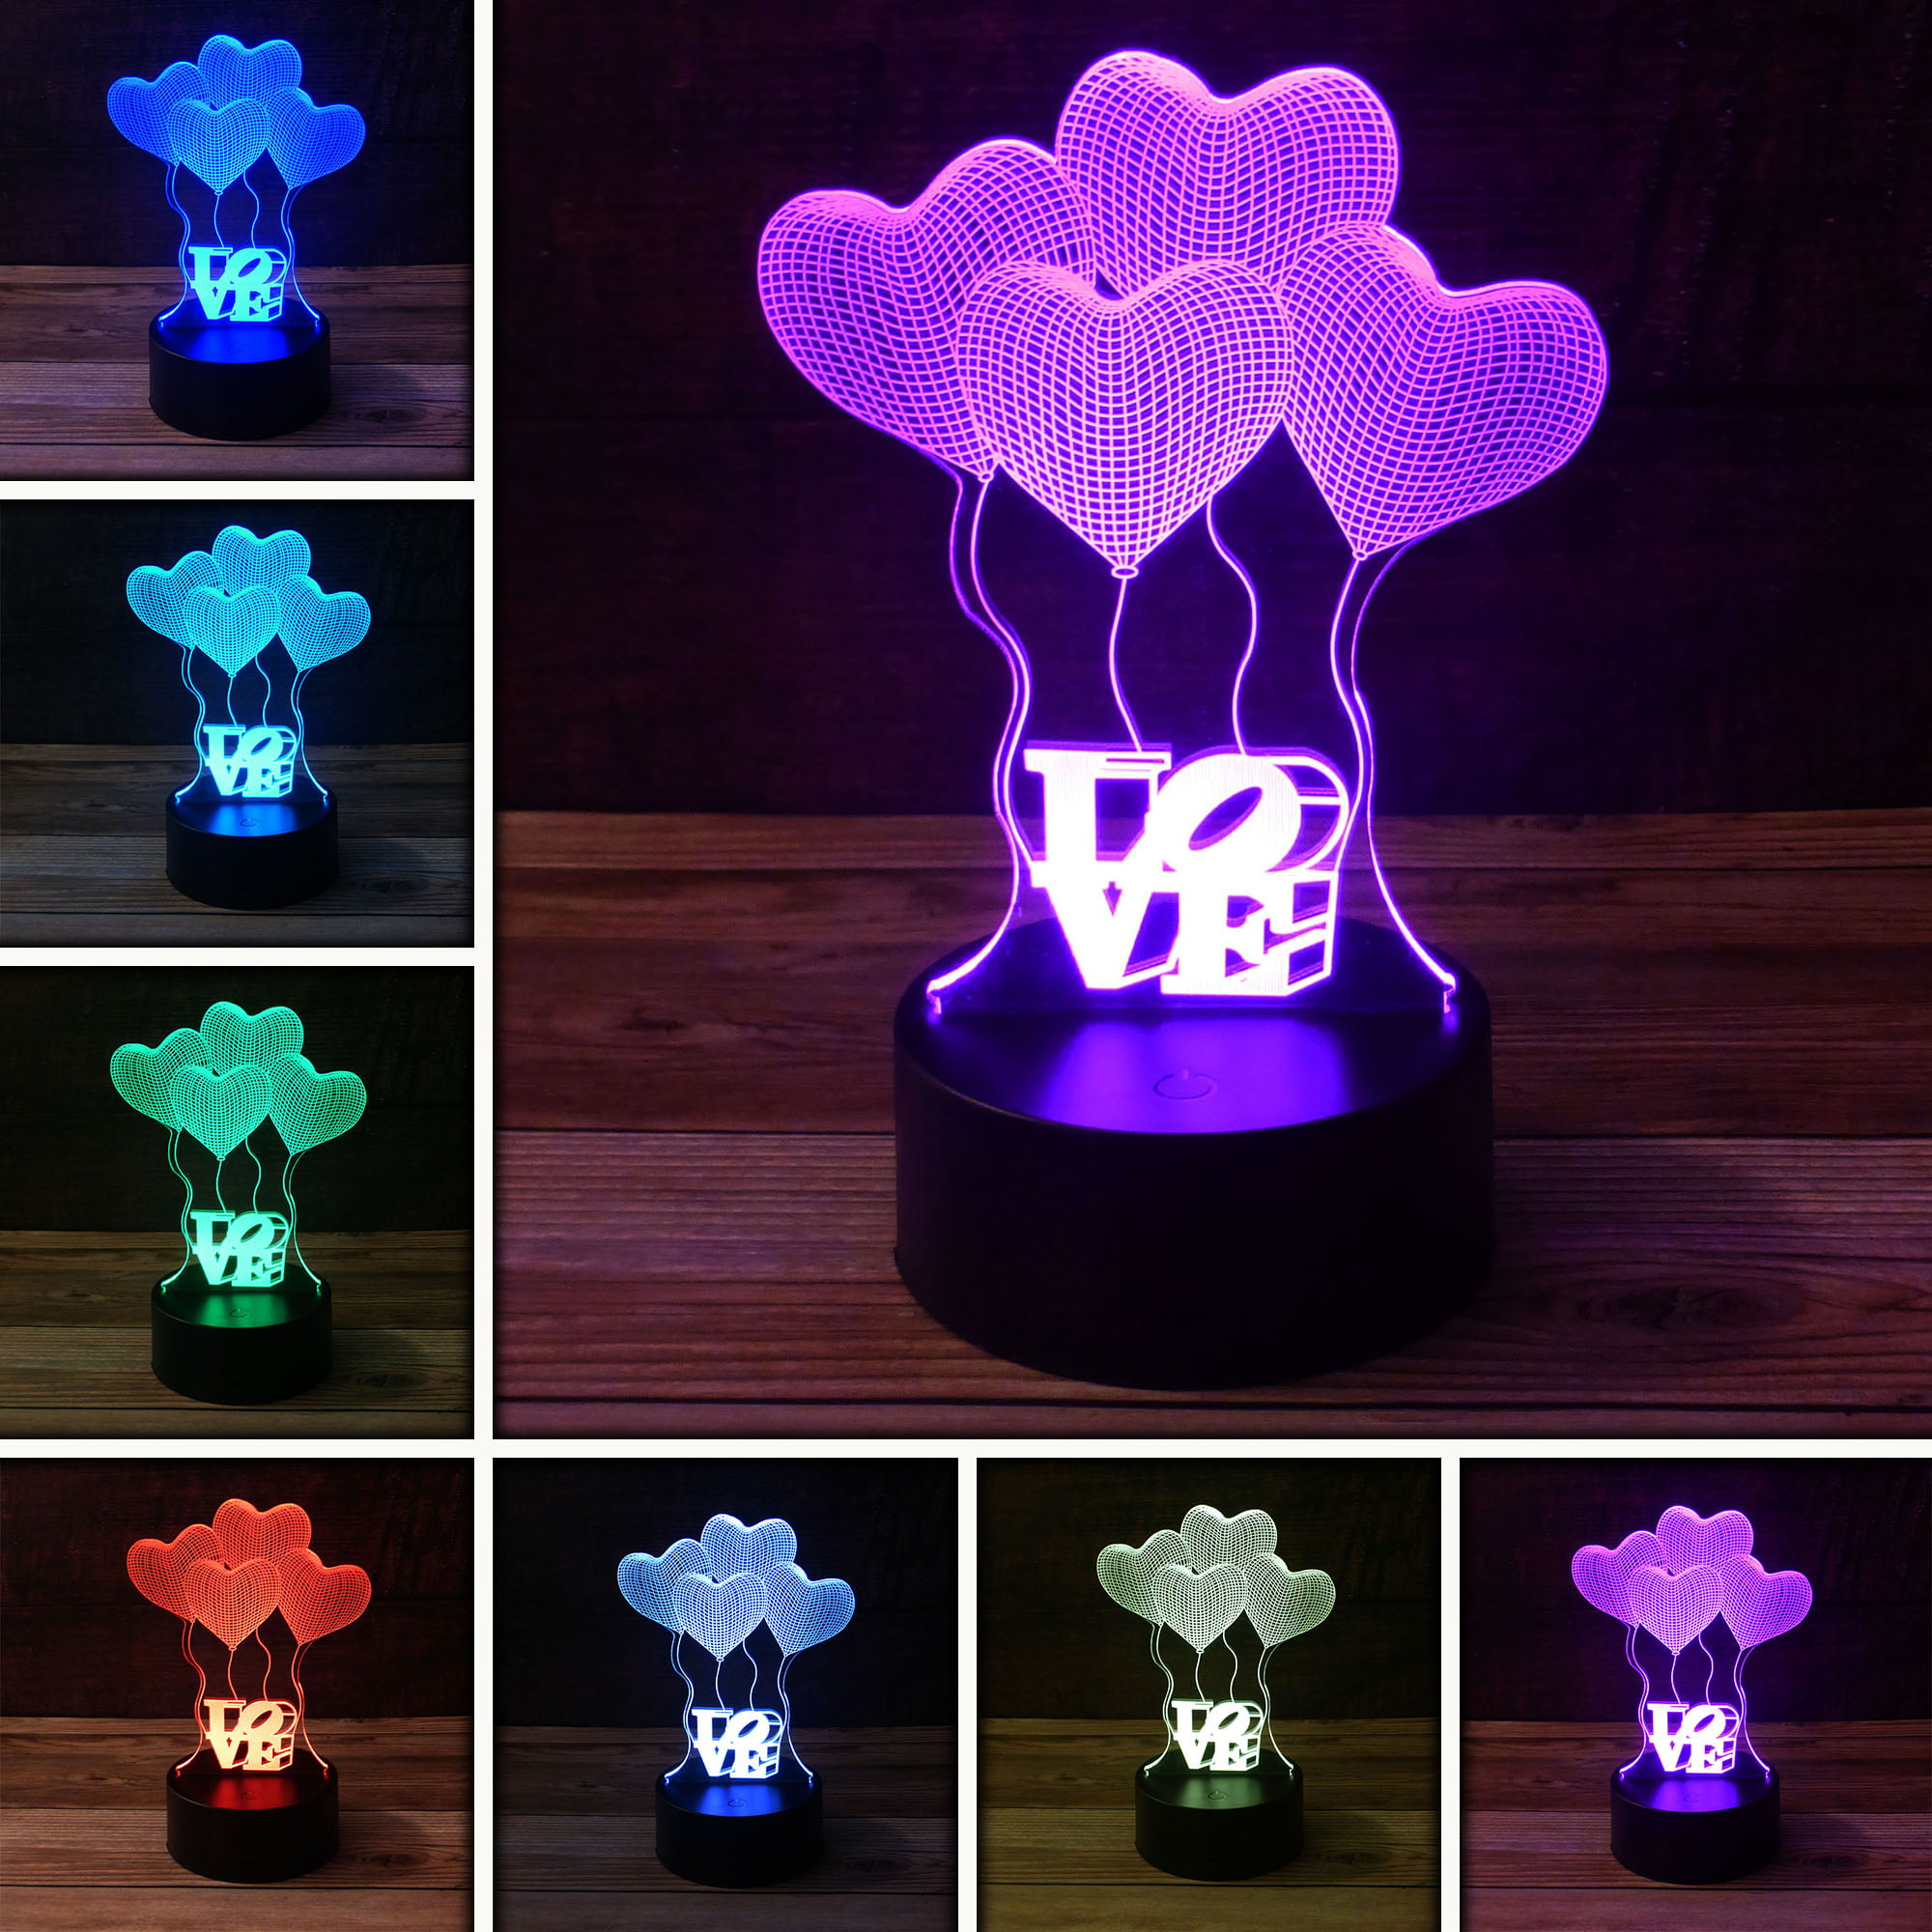 Romantic Heart Balloon 3D Illusion Lamp Led Night Light 7 Colors Flashing USB...